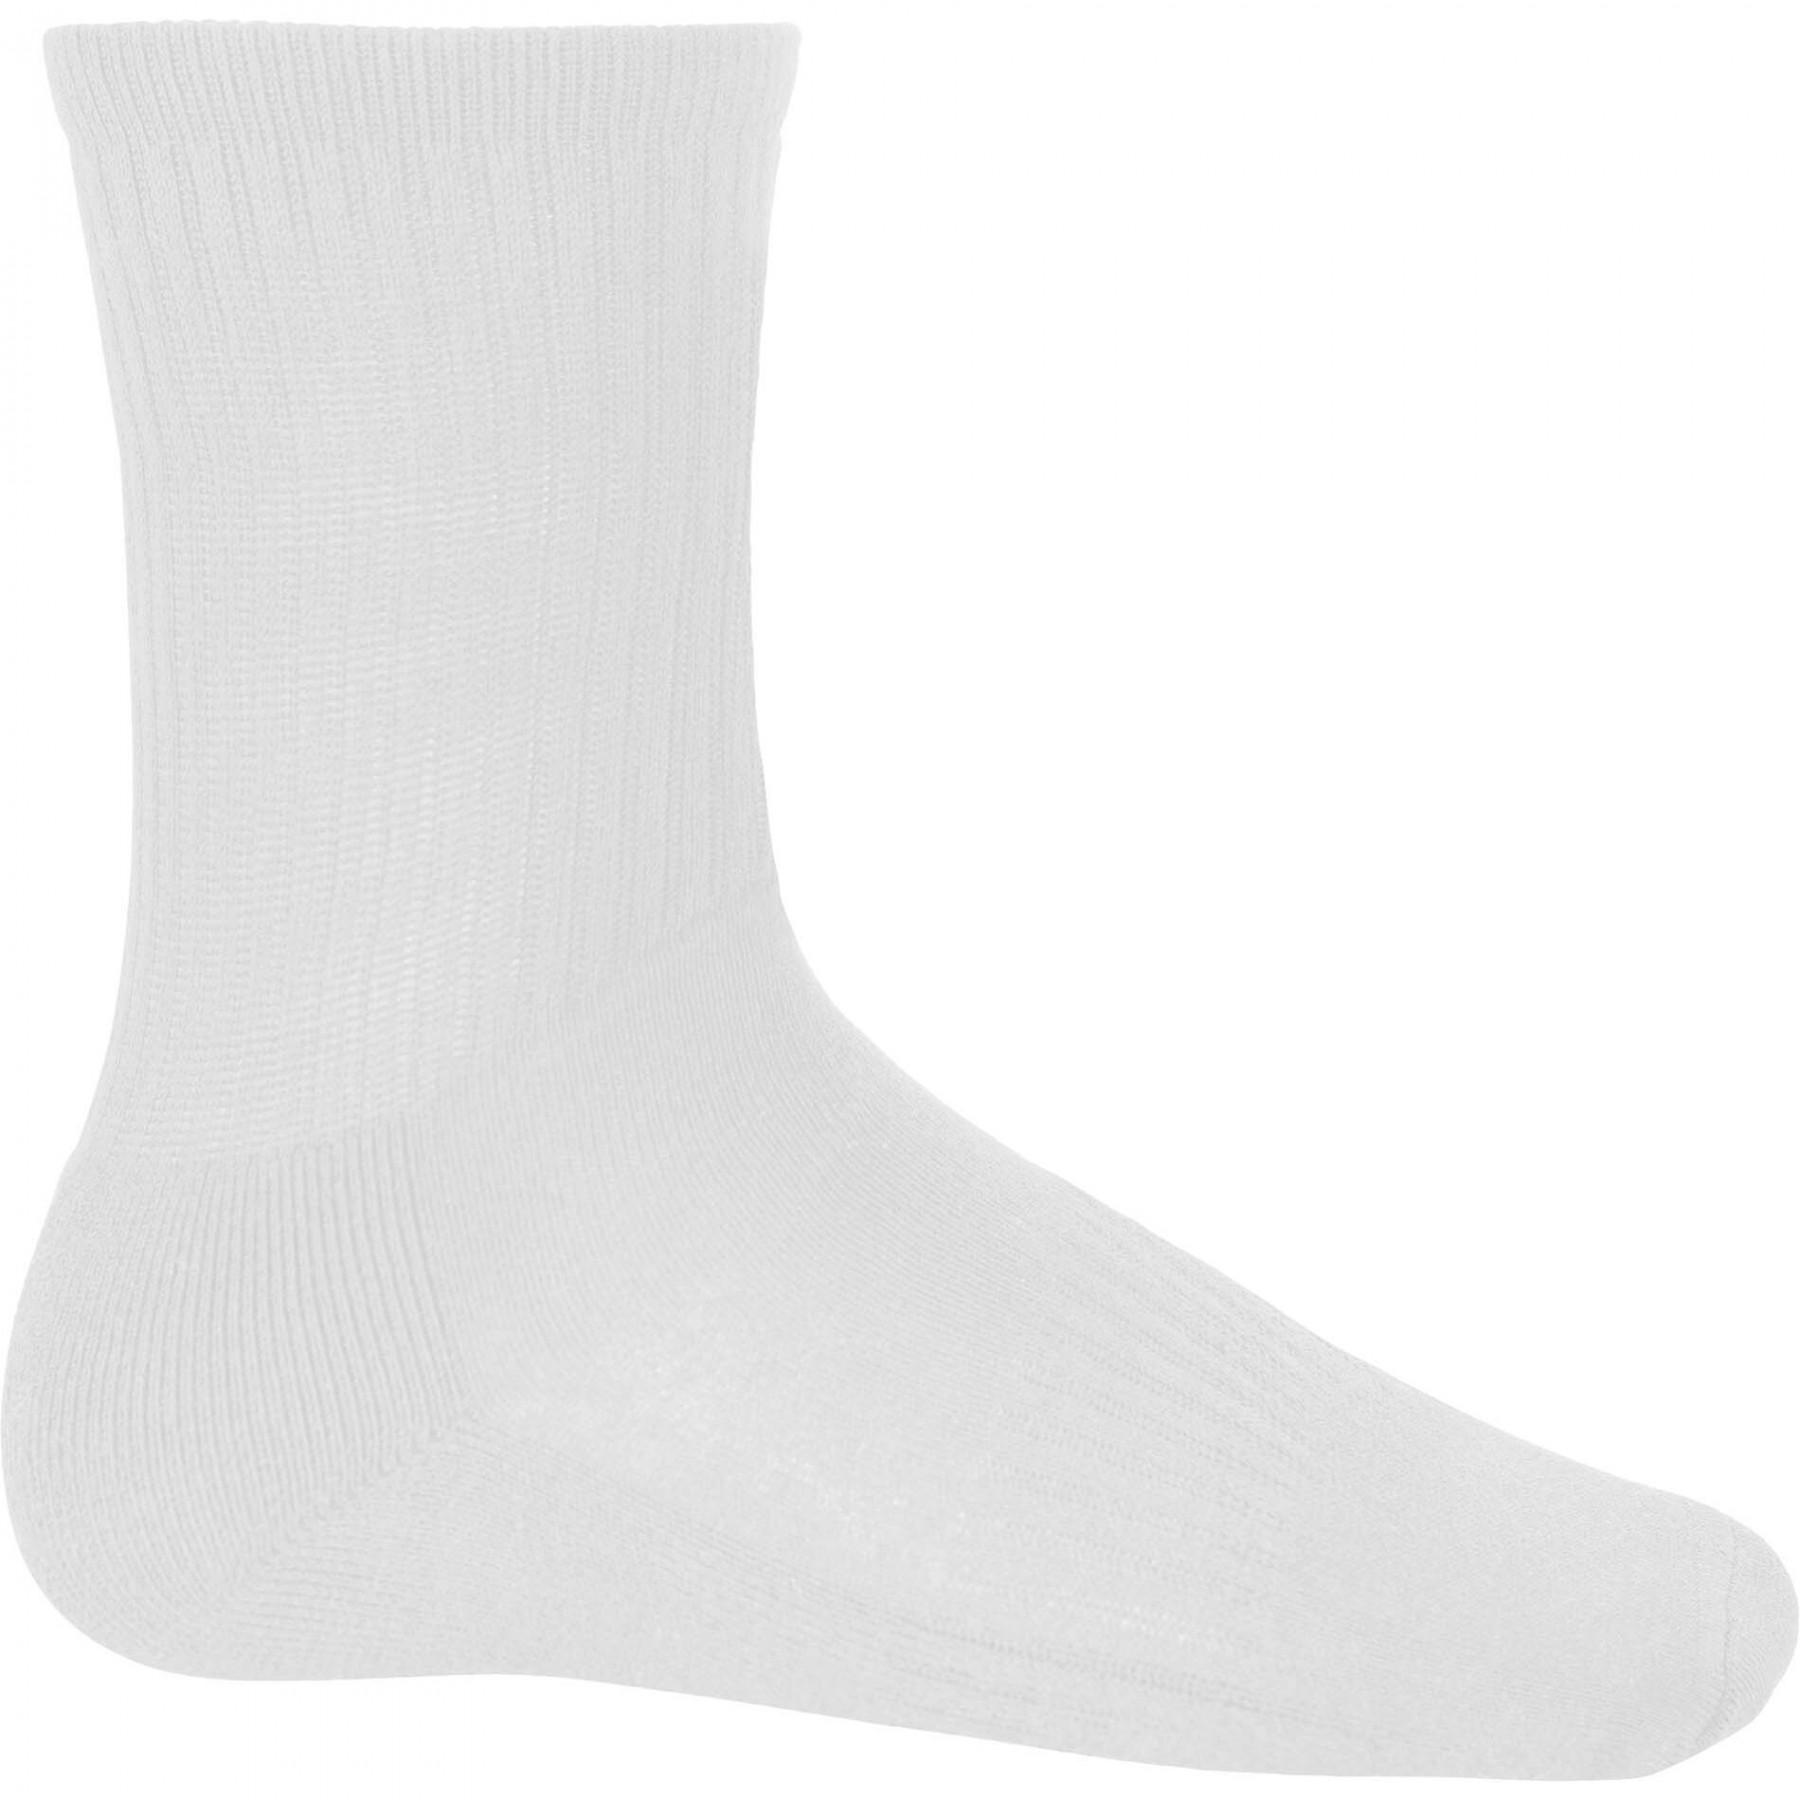 Multi-sport socks Proact